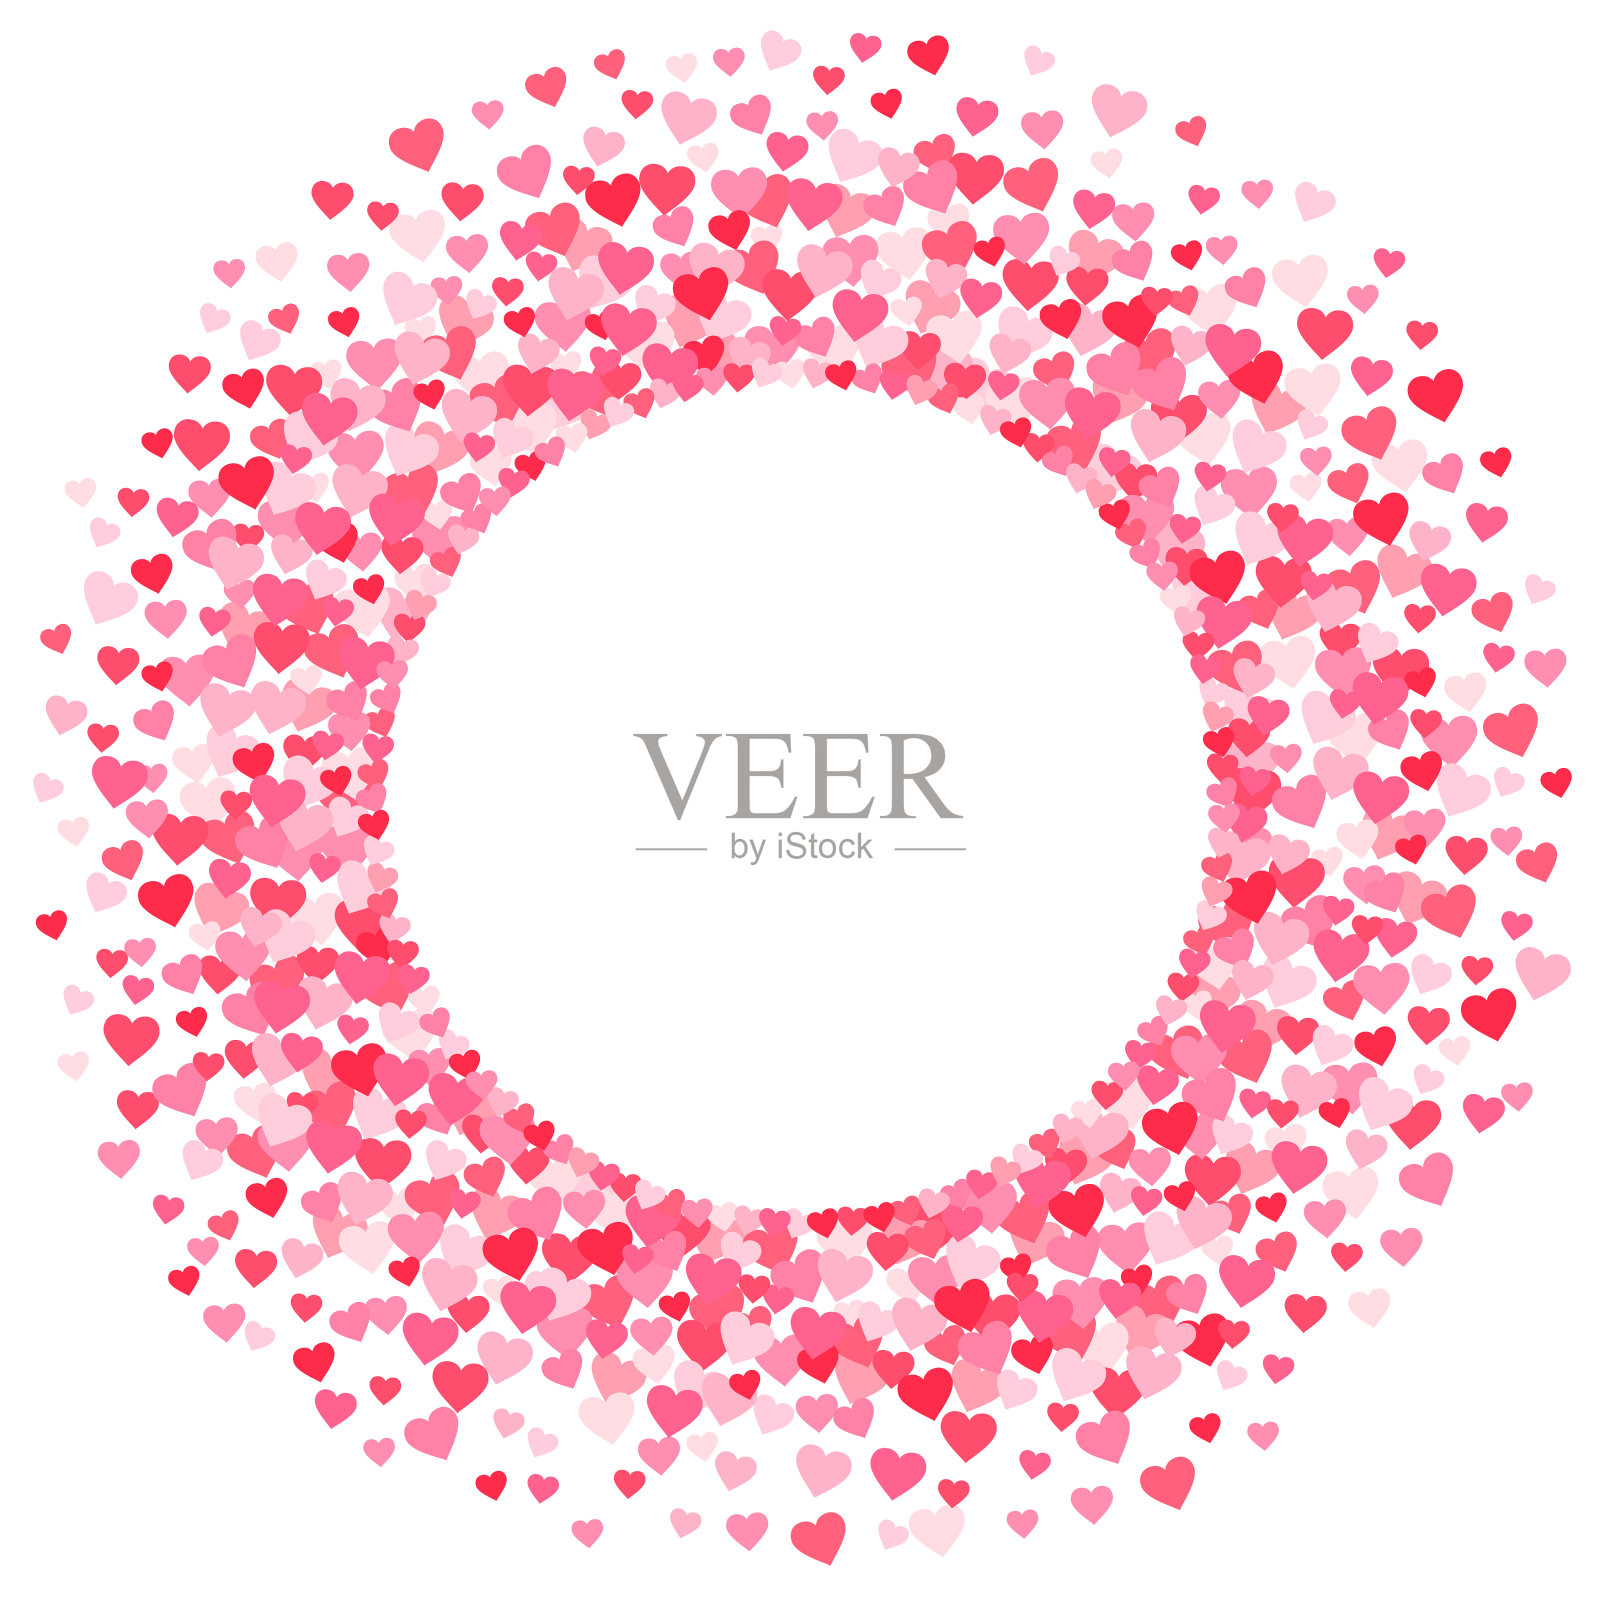 Vector粉色和红色情人节心形框架插画图片素材